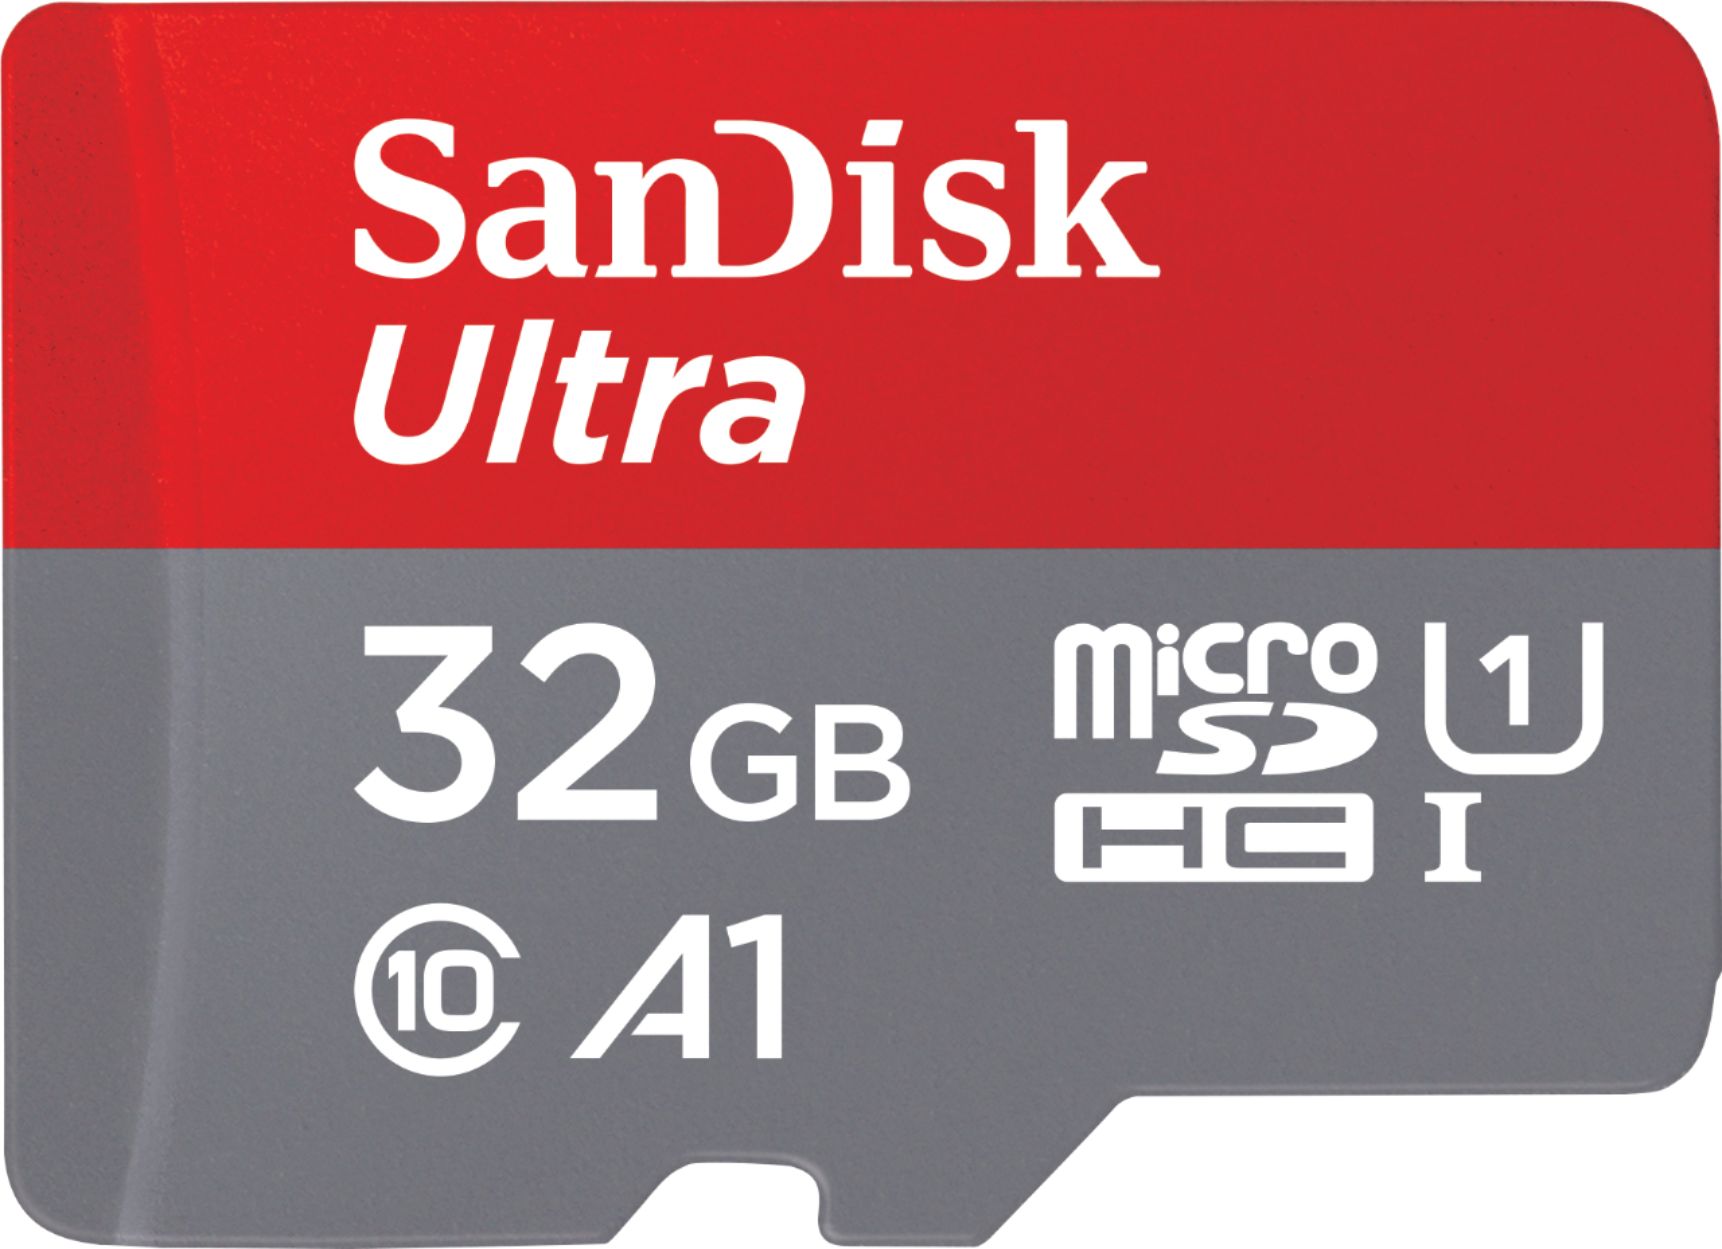 Incontable Percepción carta SanDisk Ultra 32GB microSDHC Class 10 Memory Card SDSDQUI-032G-A46 - Best  Buy